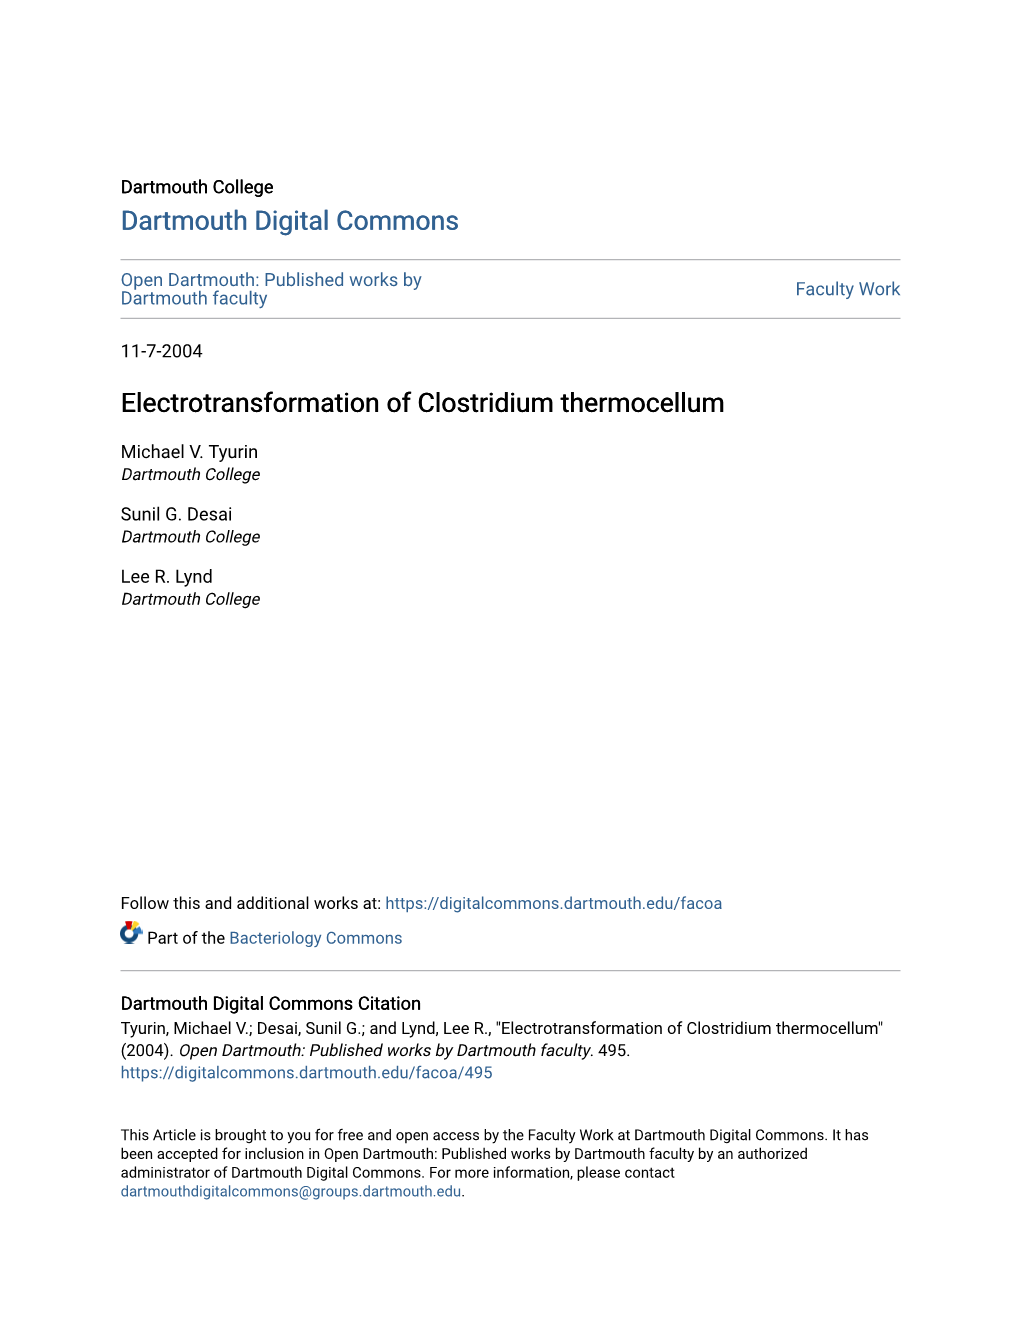 Electrotransformation of Clostridium Thermocellum